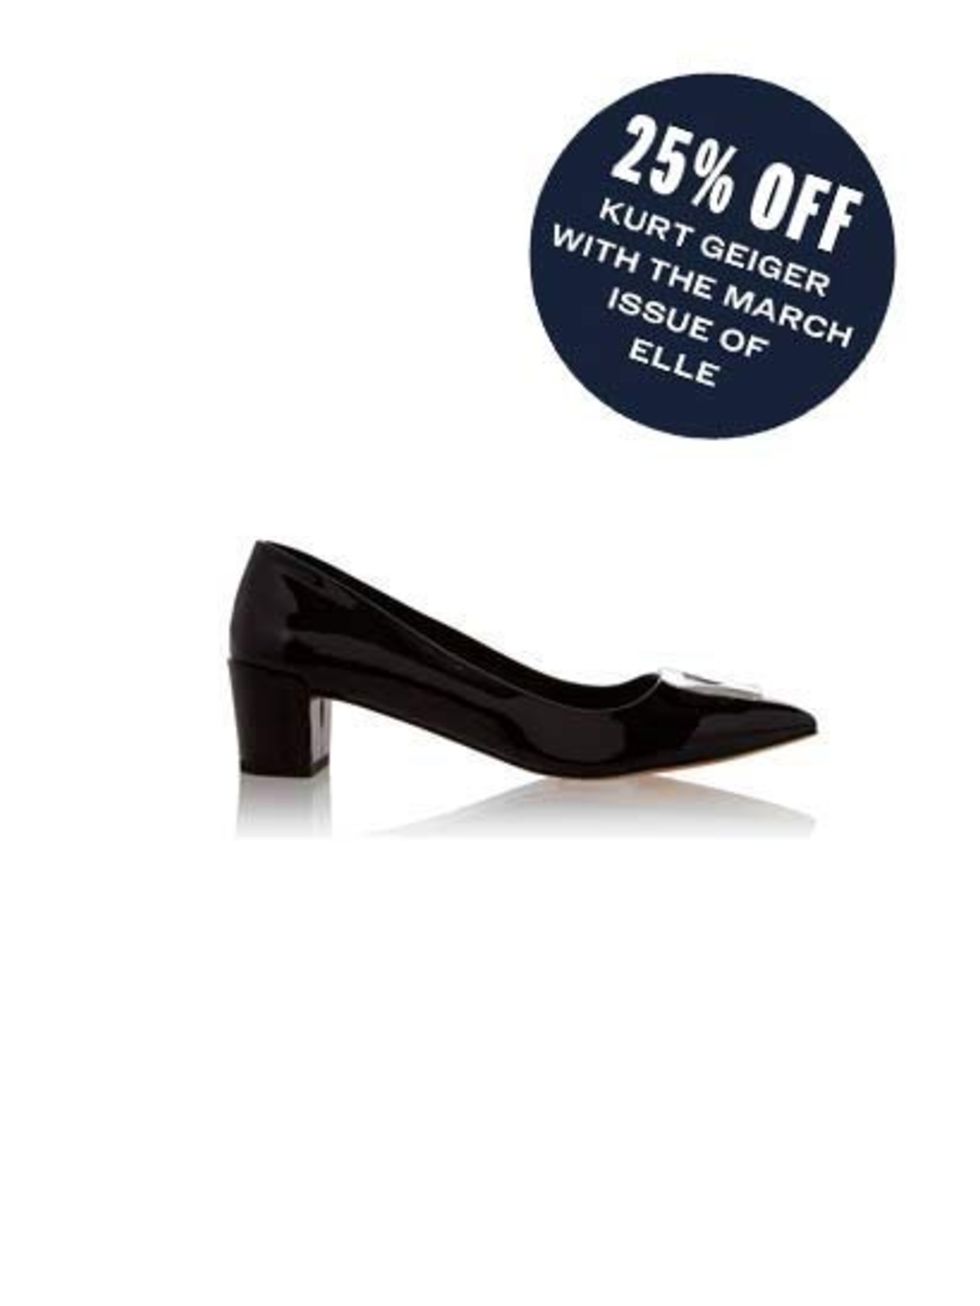 <p>This season's hottest heel shape.</p><p><a href="http://www.kurtgeiger.com/alpha-black-patent-41-carvela-kurt-geiger-shoe.html">Block-heel court shoe</a>, £85</p>